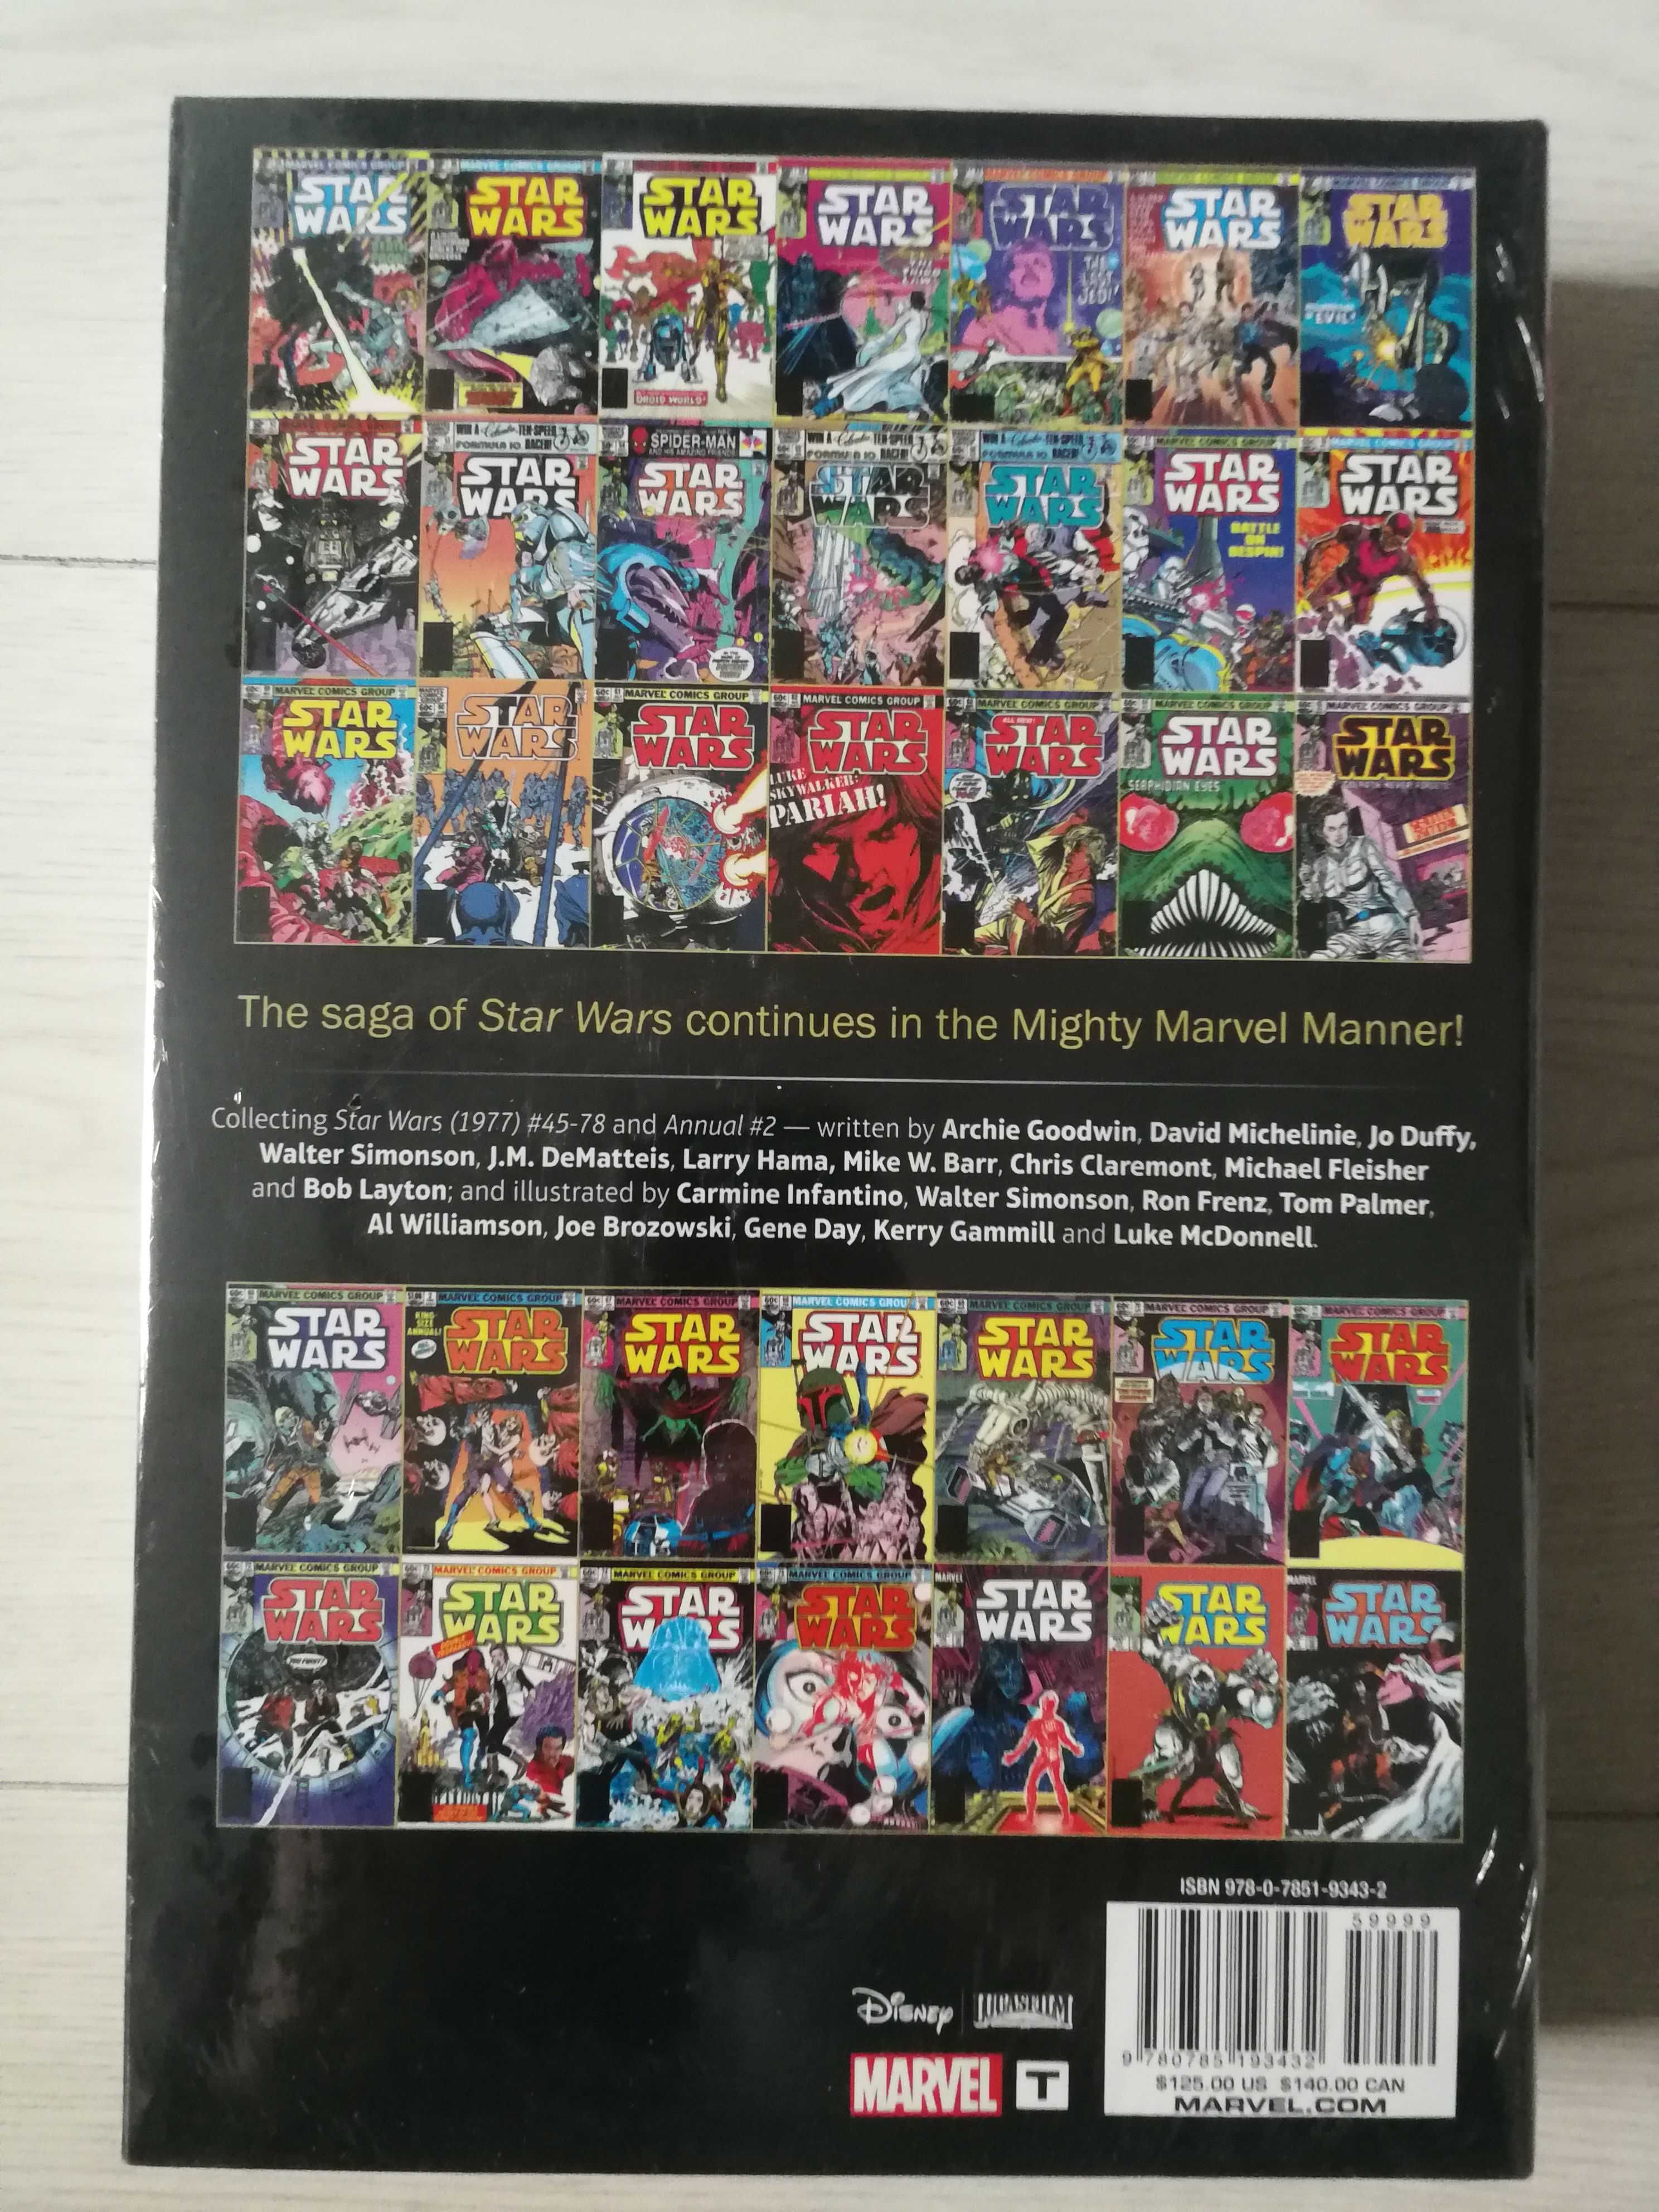 Star Wars The Original Marvel Years Omnibus 2